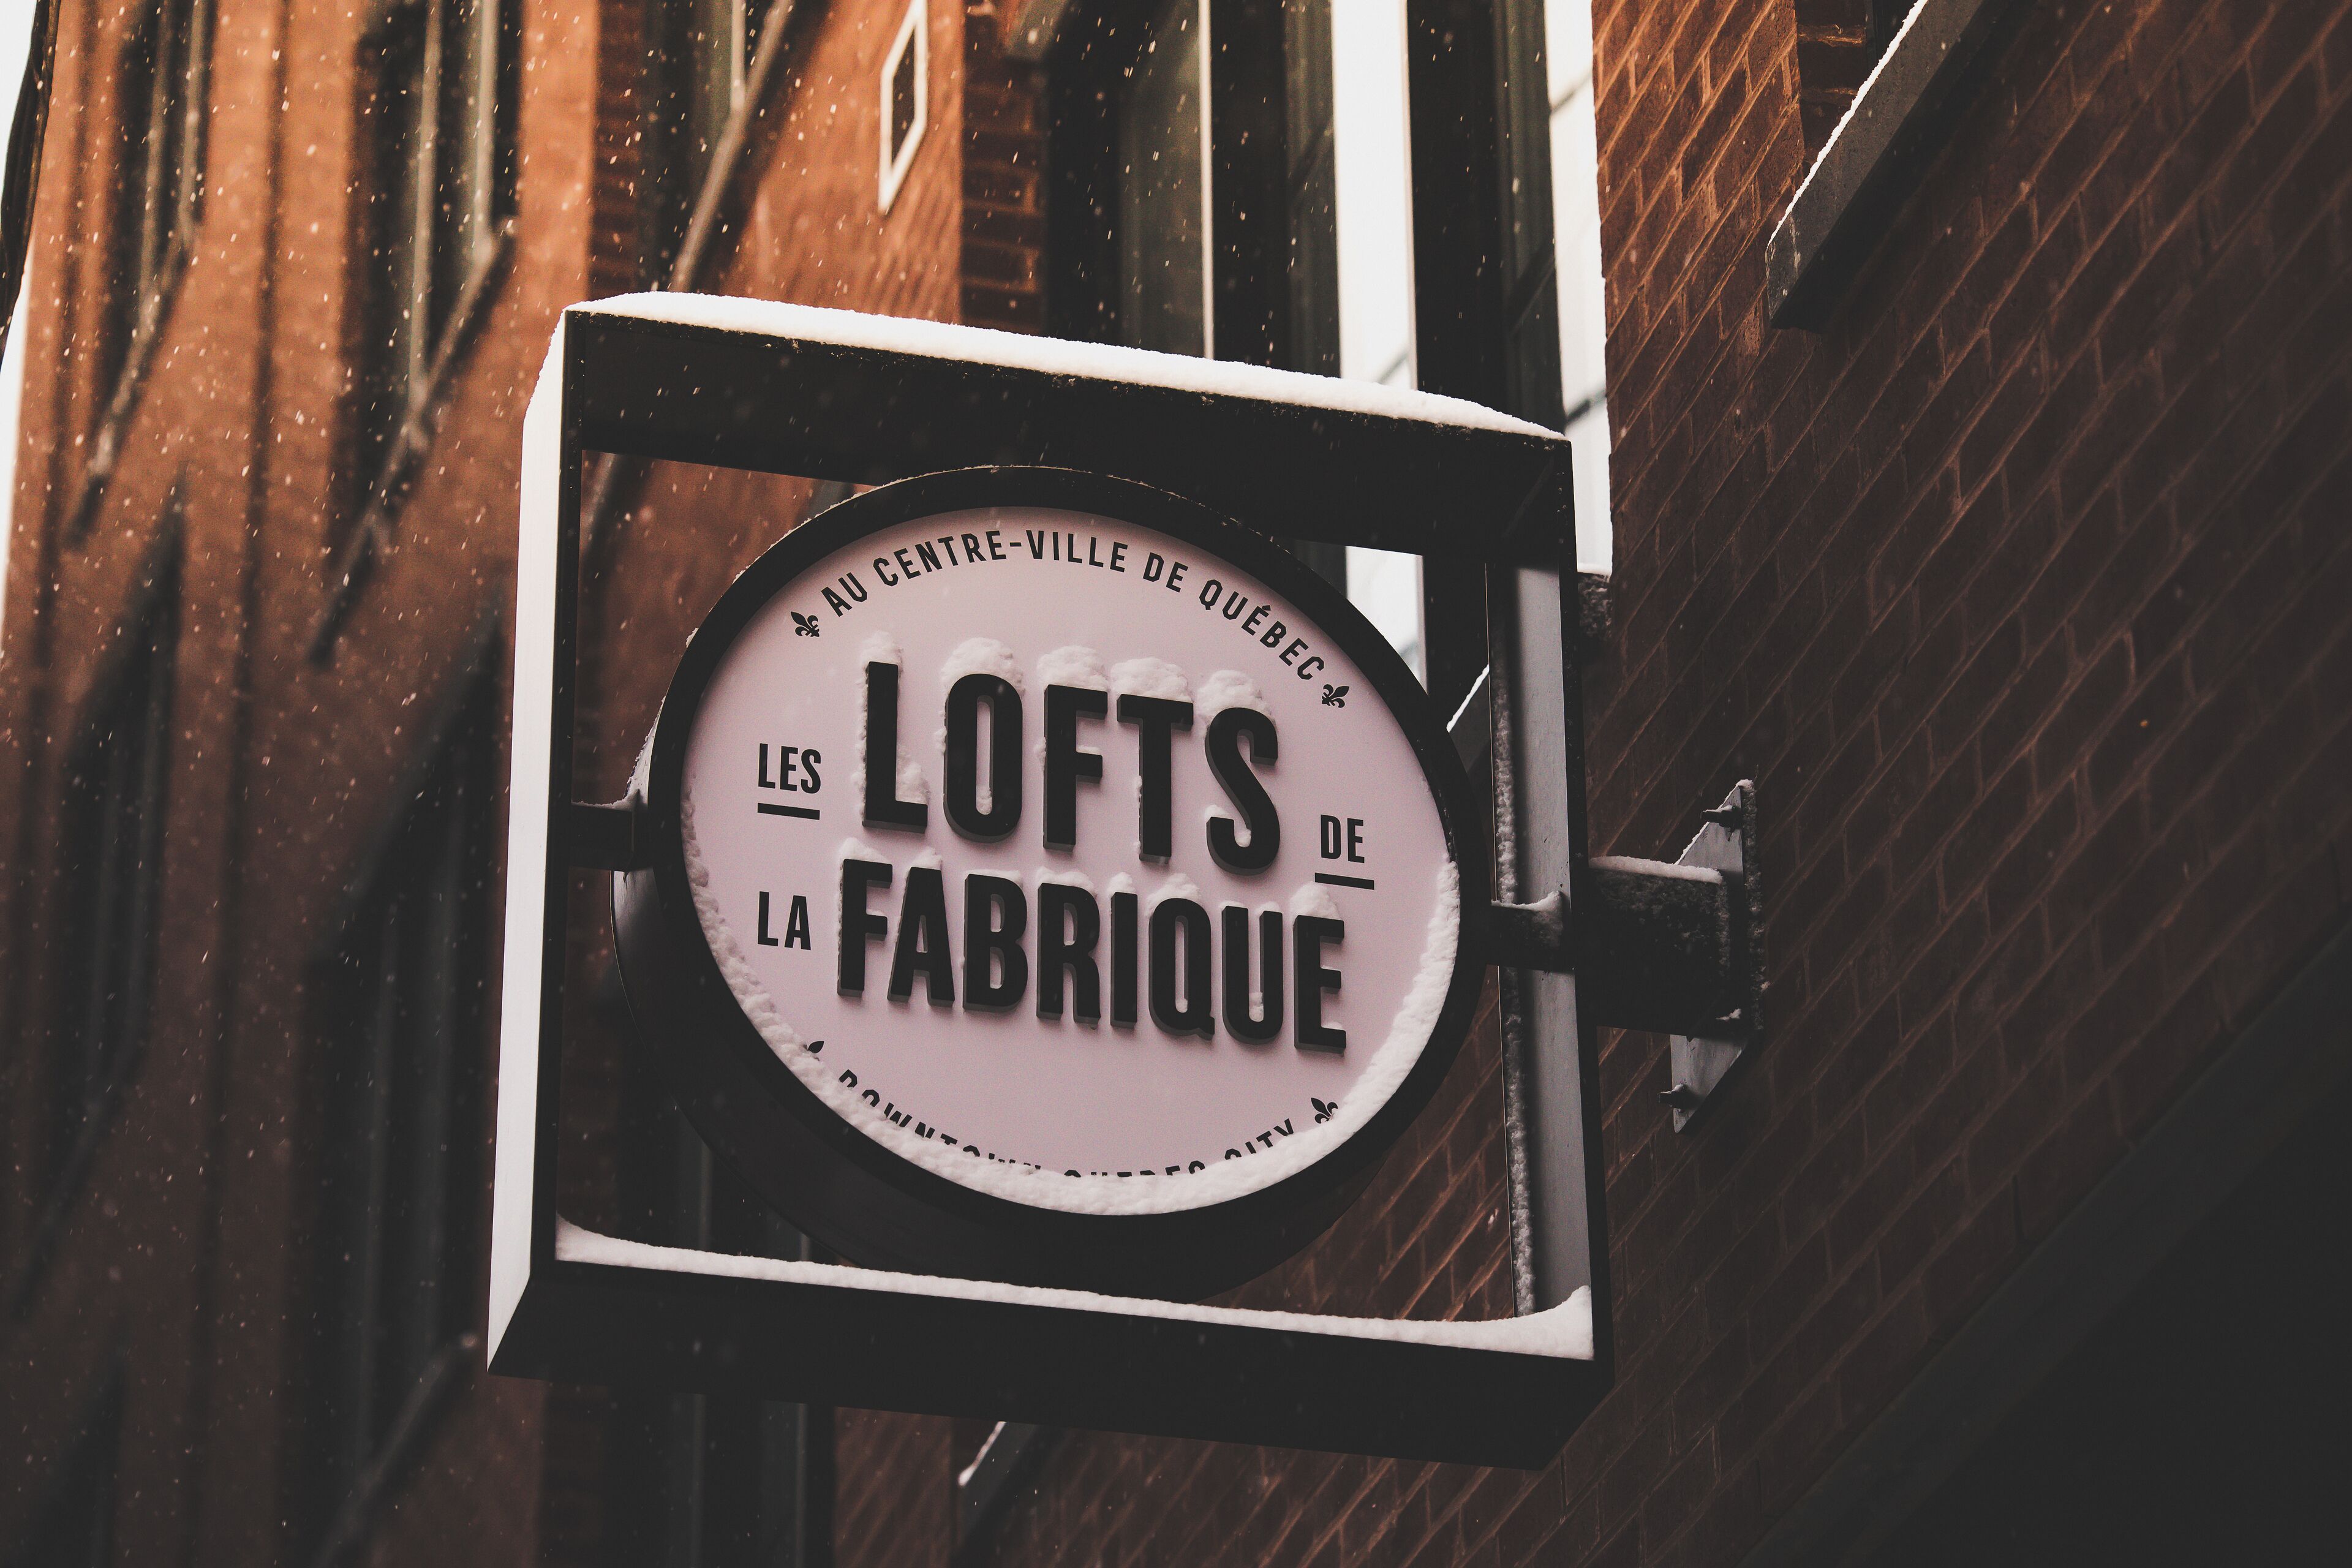 Les Lofts de la Fabrique by Les Lofts Vieux-Québec